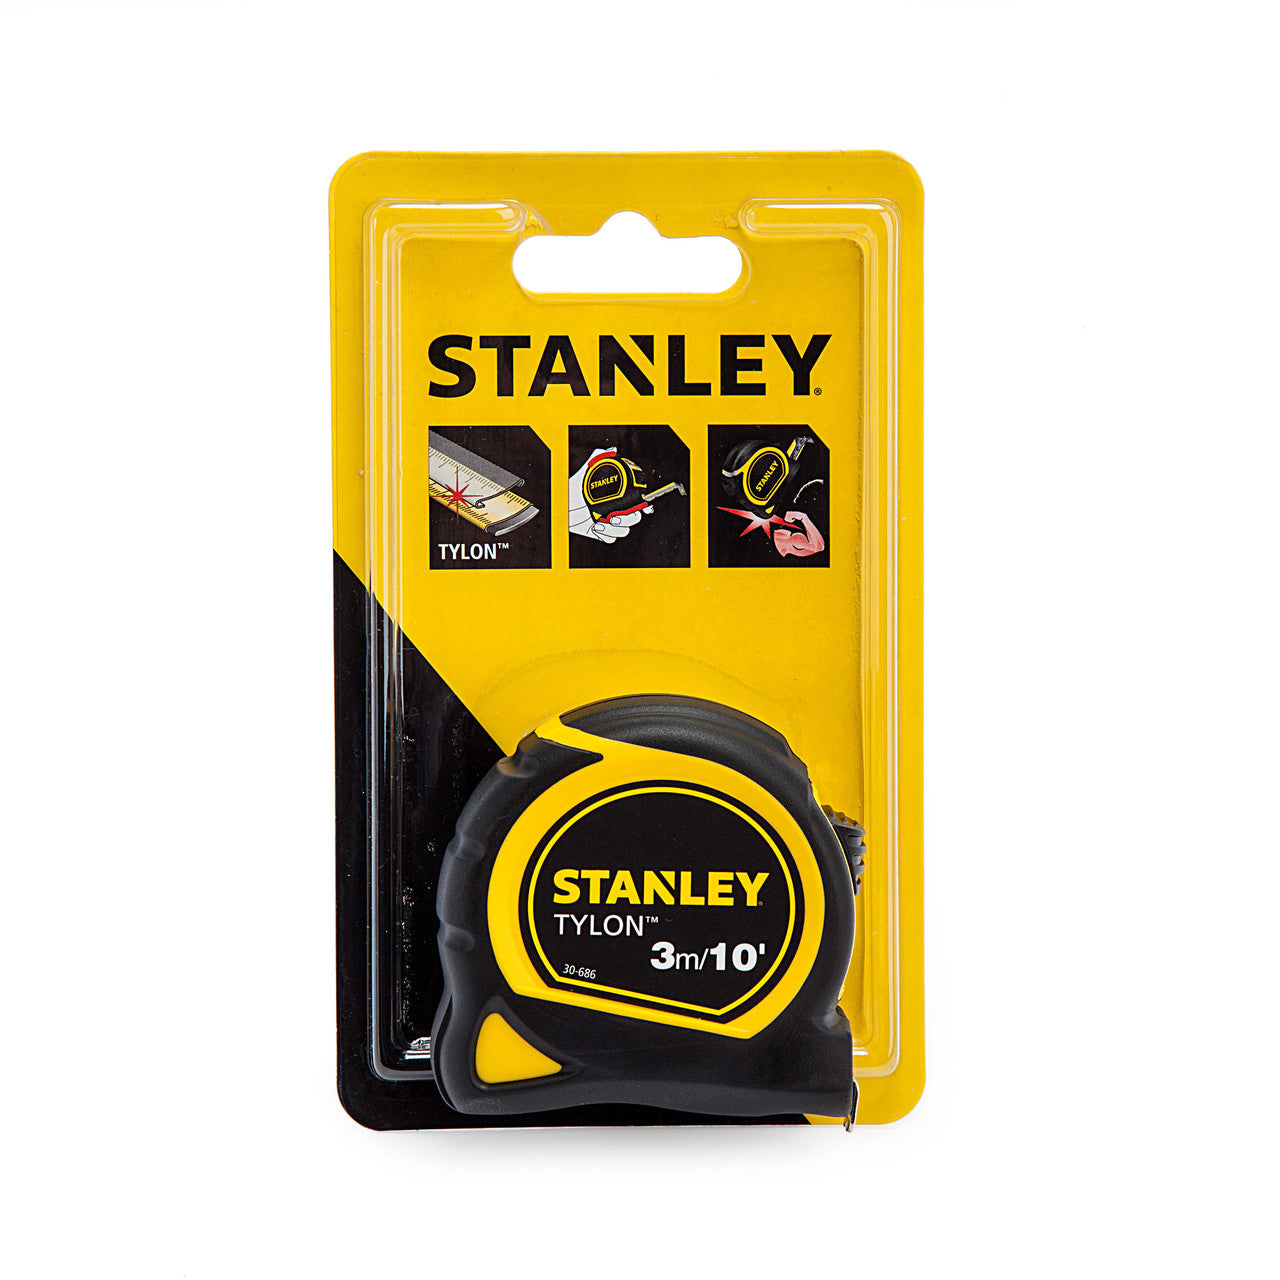 Stanley 0-30-686 Metric/Imperial Tylon Pocket Tape Measure 3m